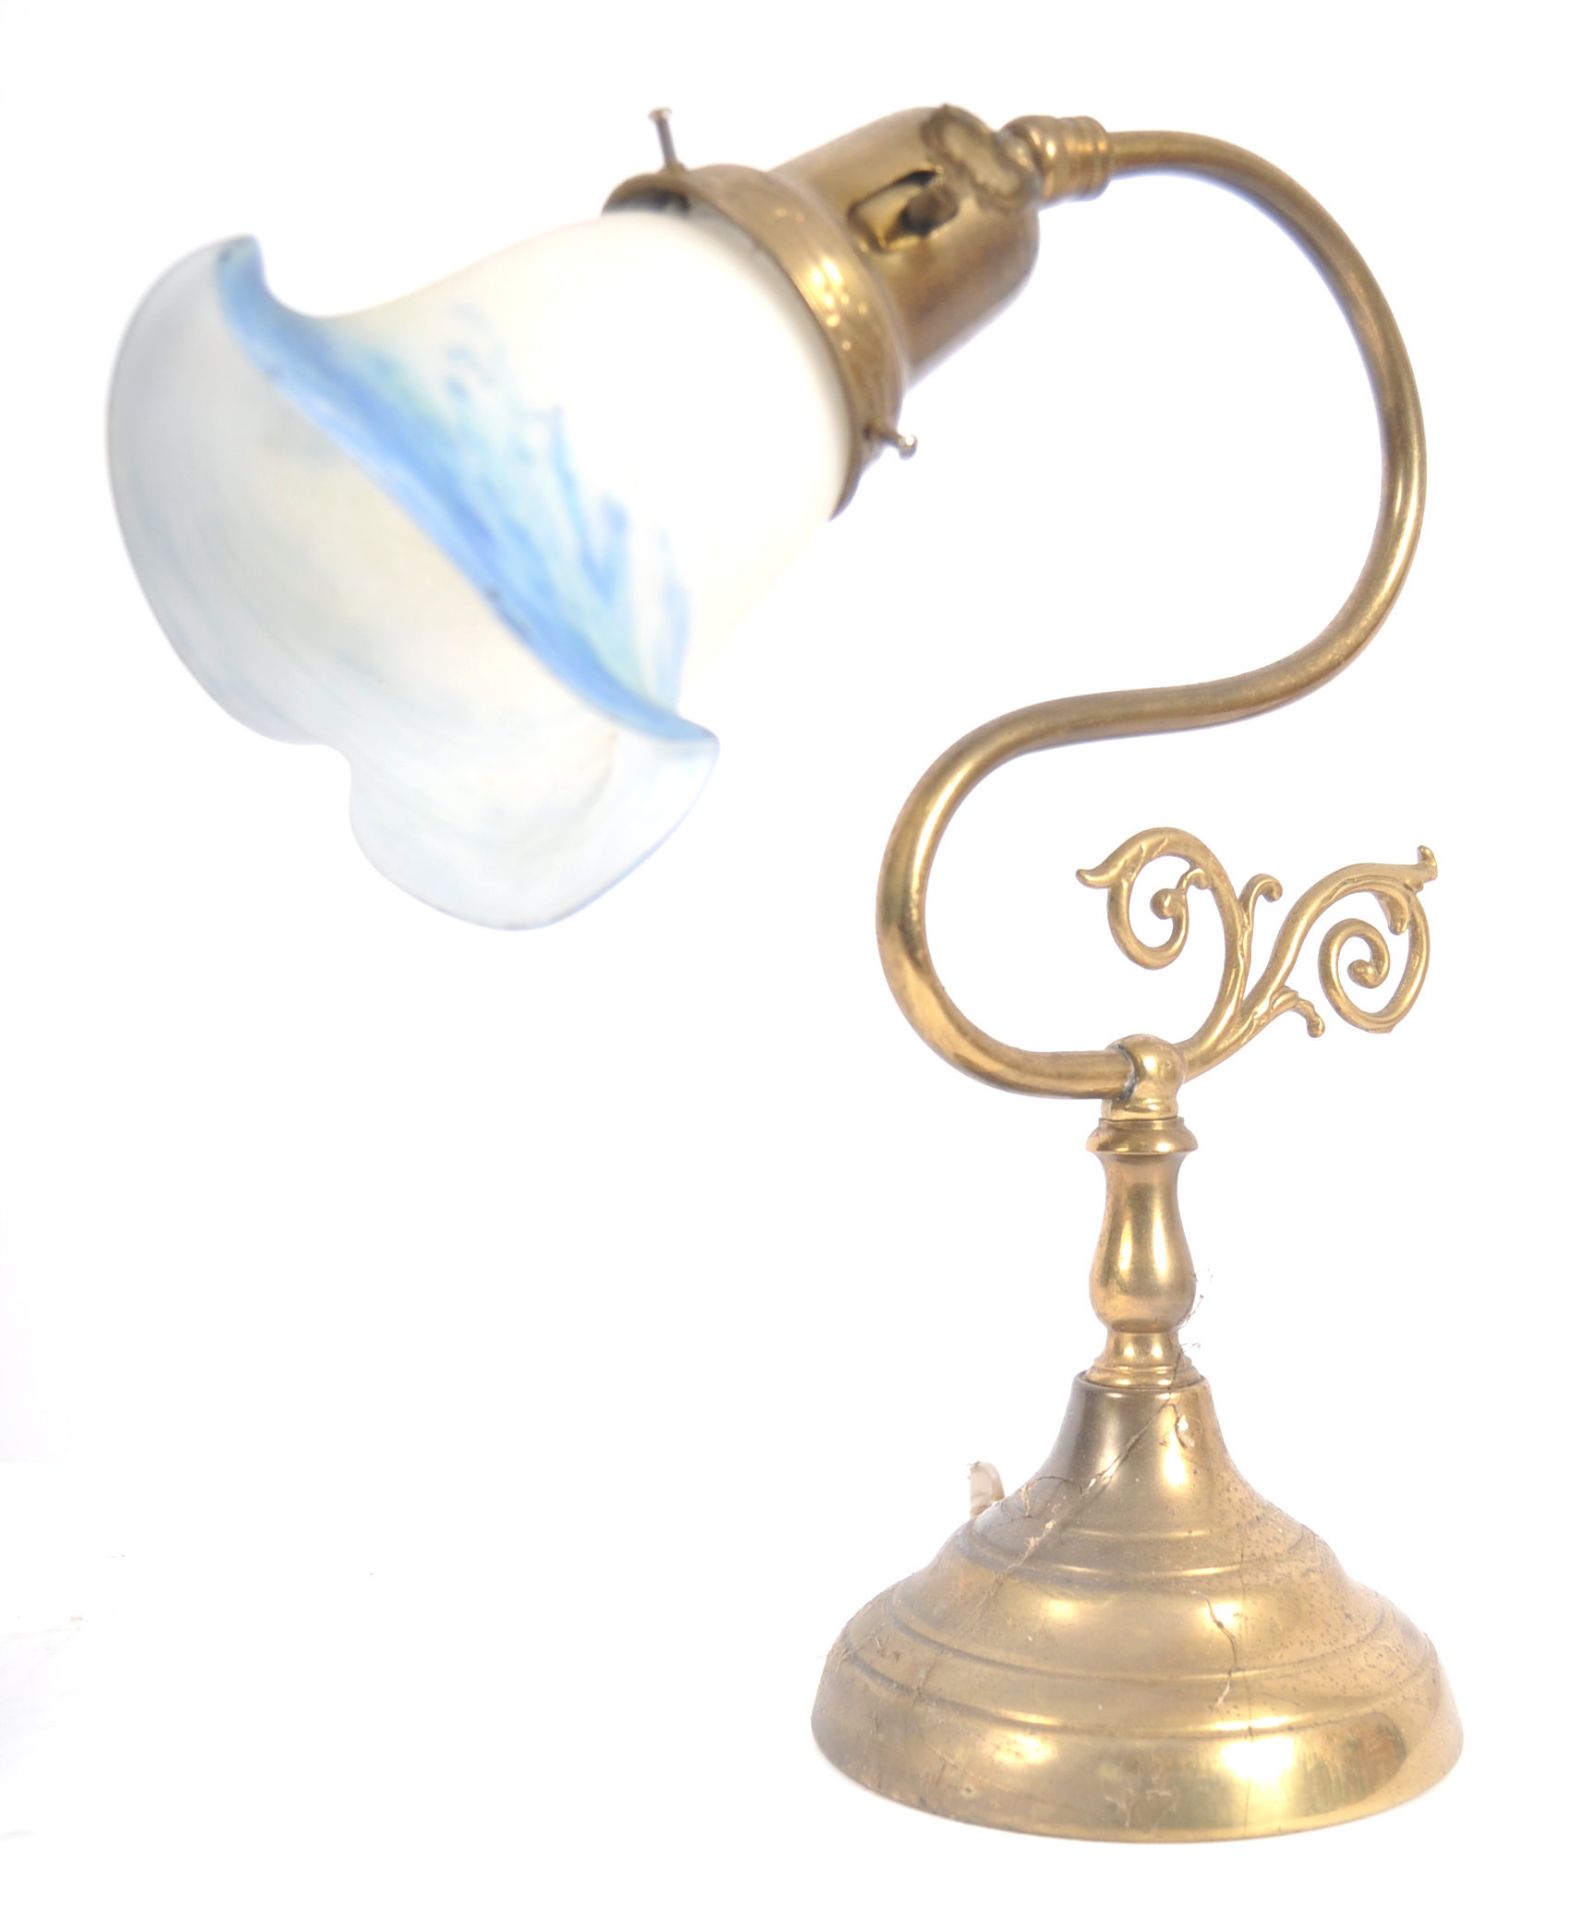 EARLY 20TH CENTURY BRASS & GLASS COACHING LAMP